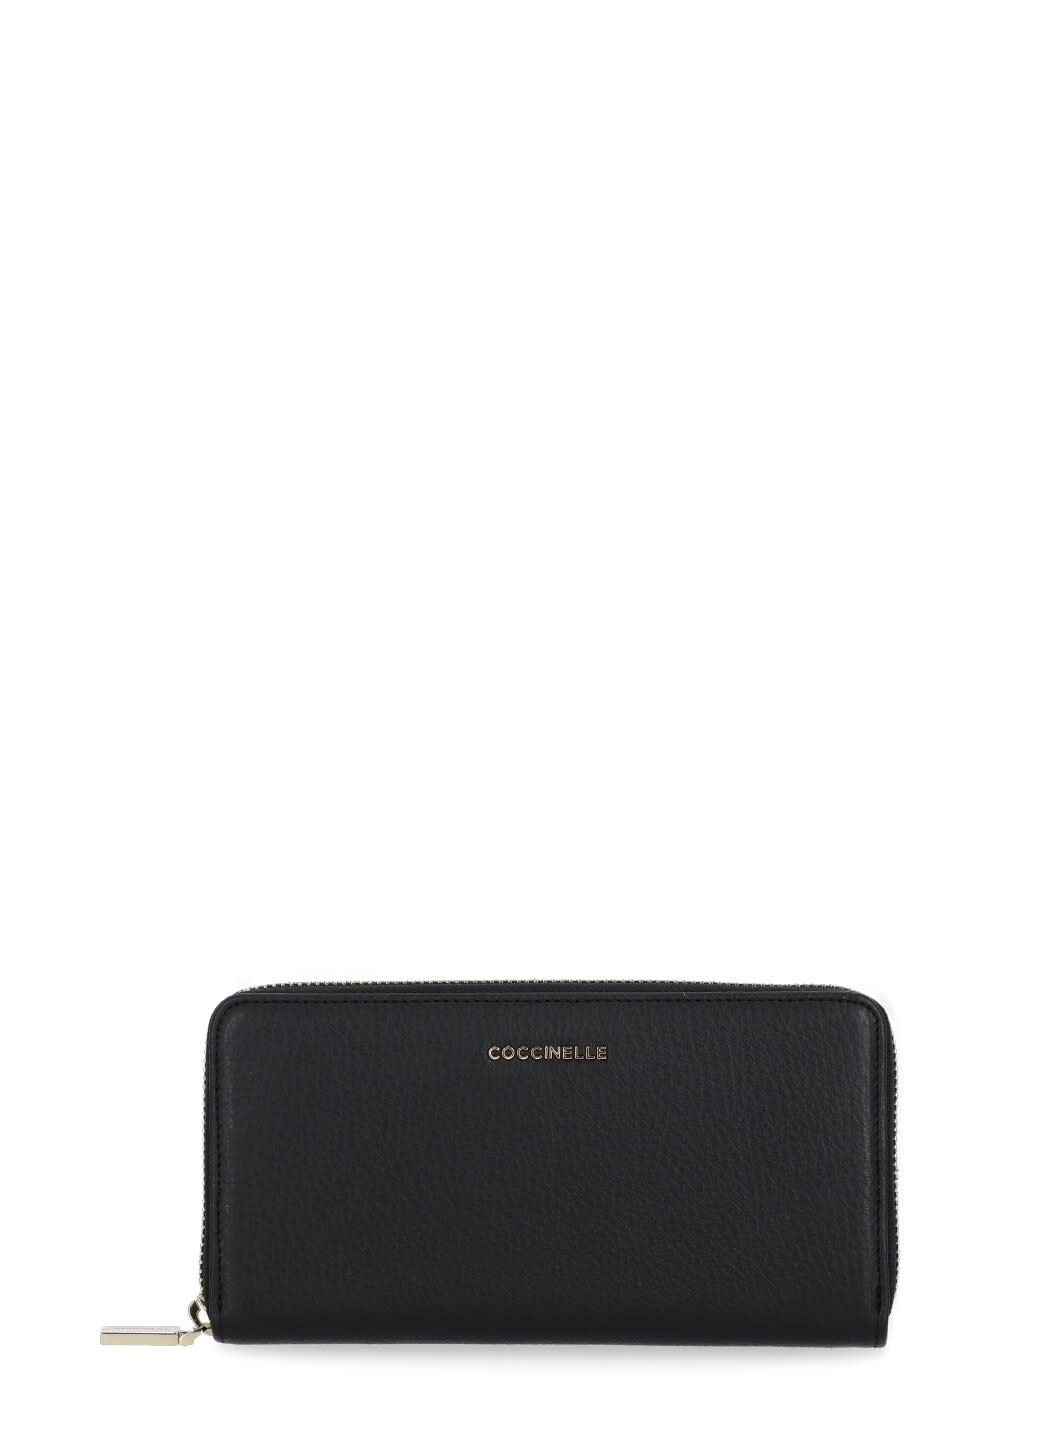 Coccinelle Metallic Soft Wallet In Black